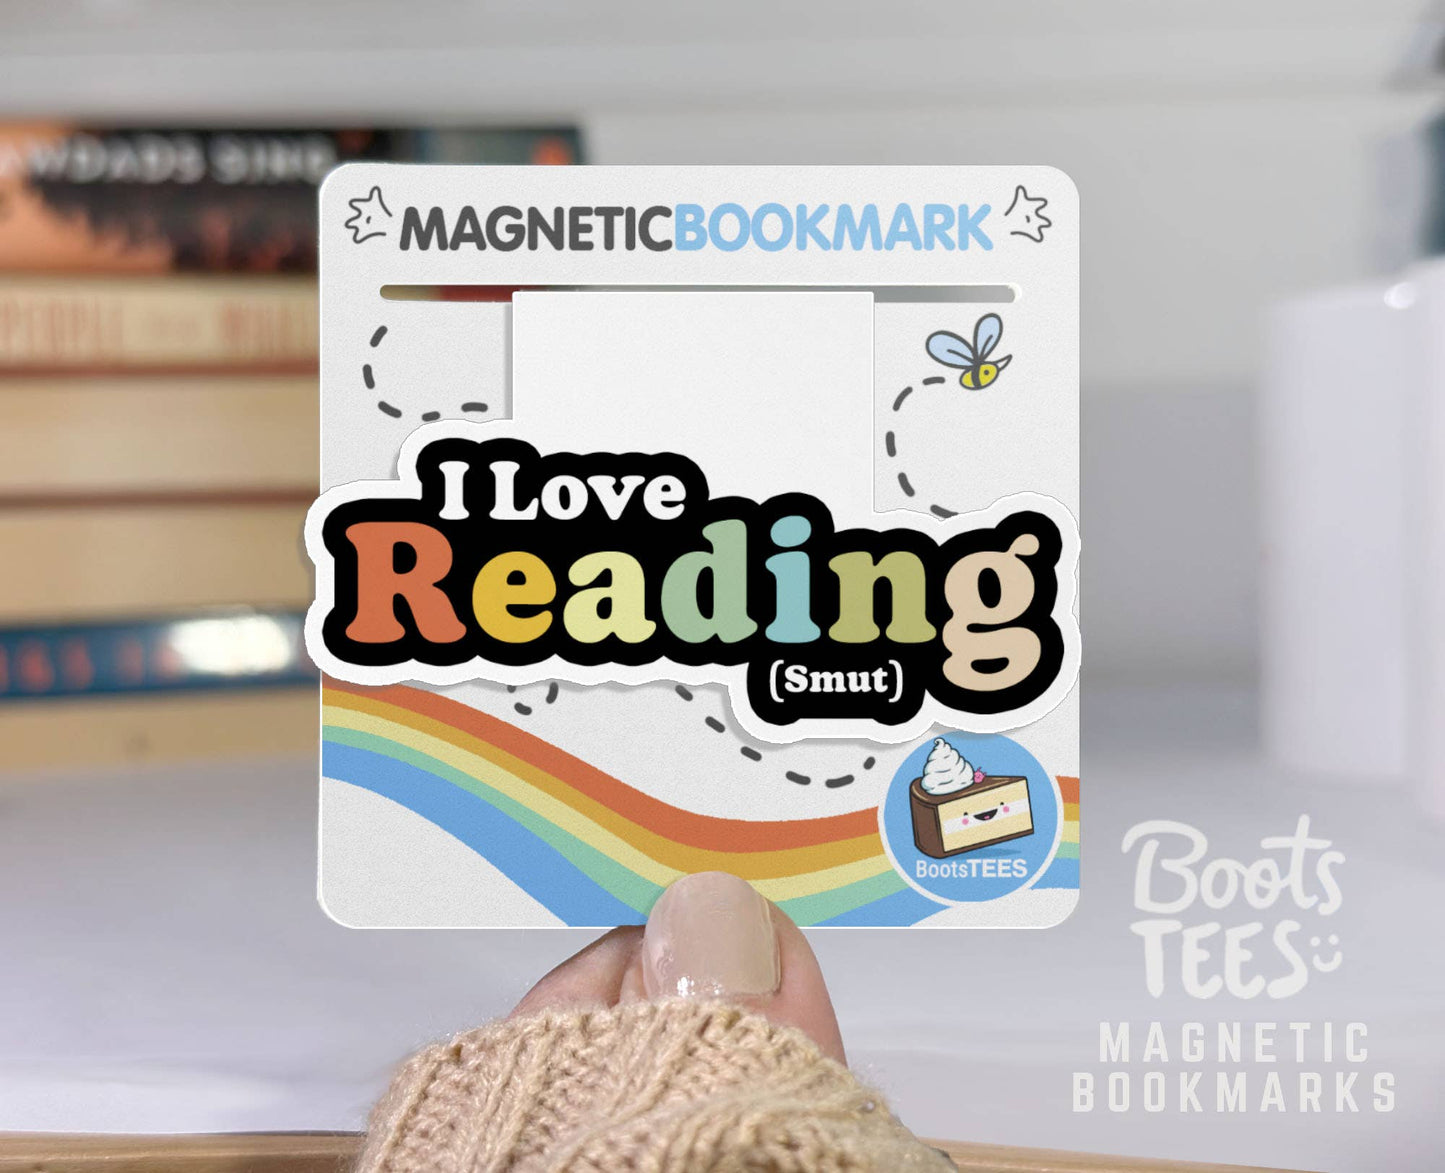 Bookmark-054: I Love Reading Smut (Magnetic)